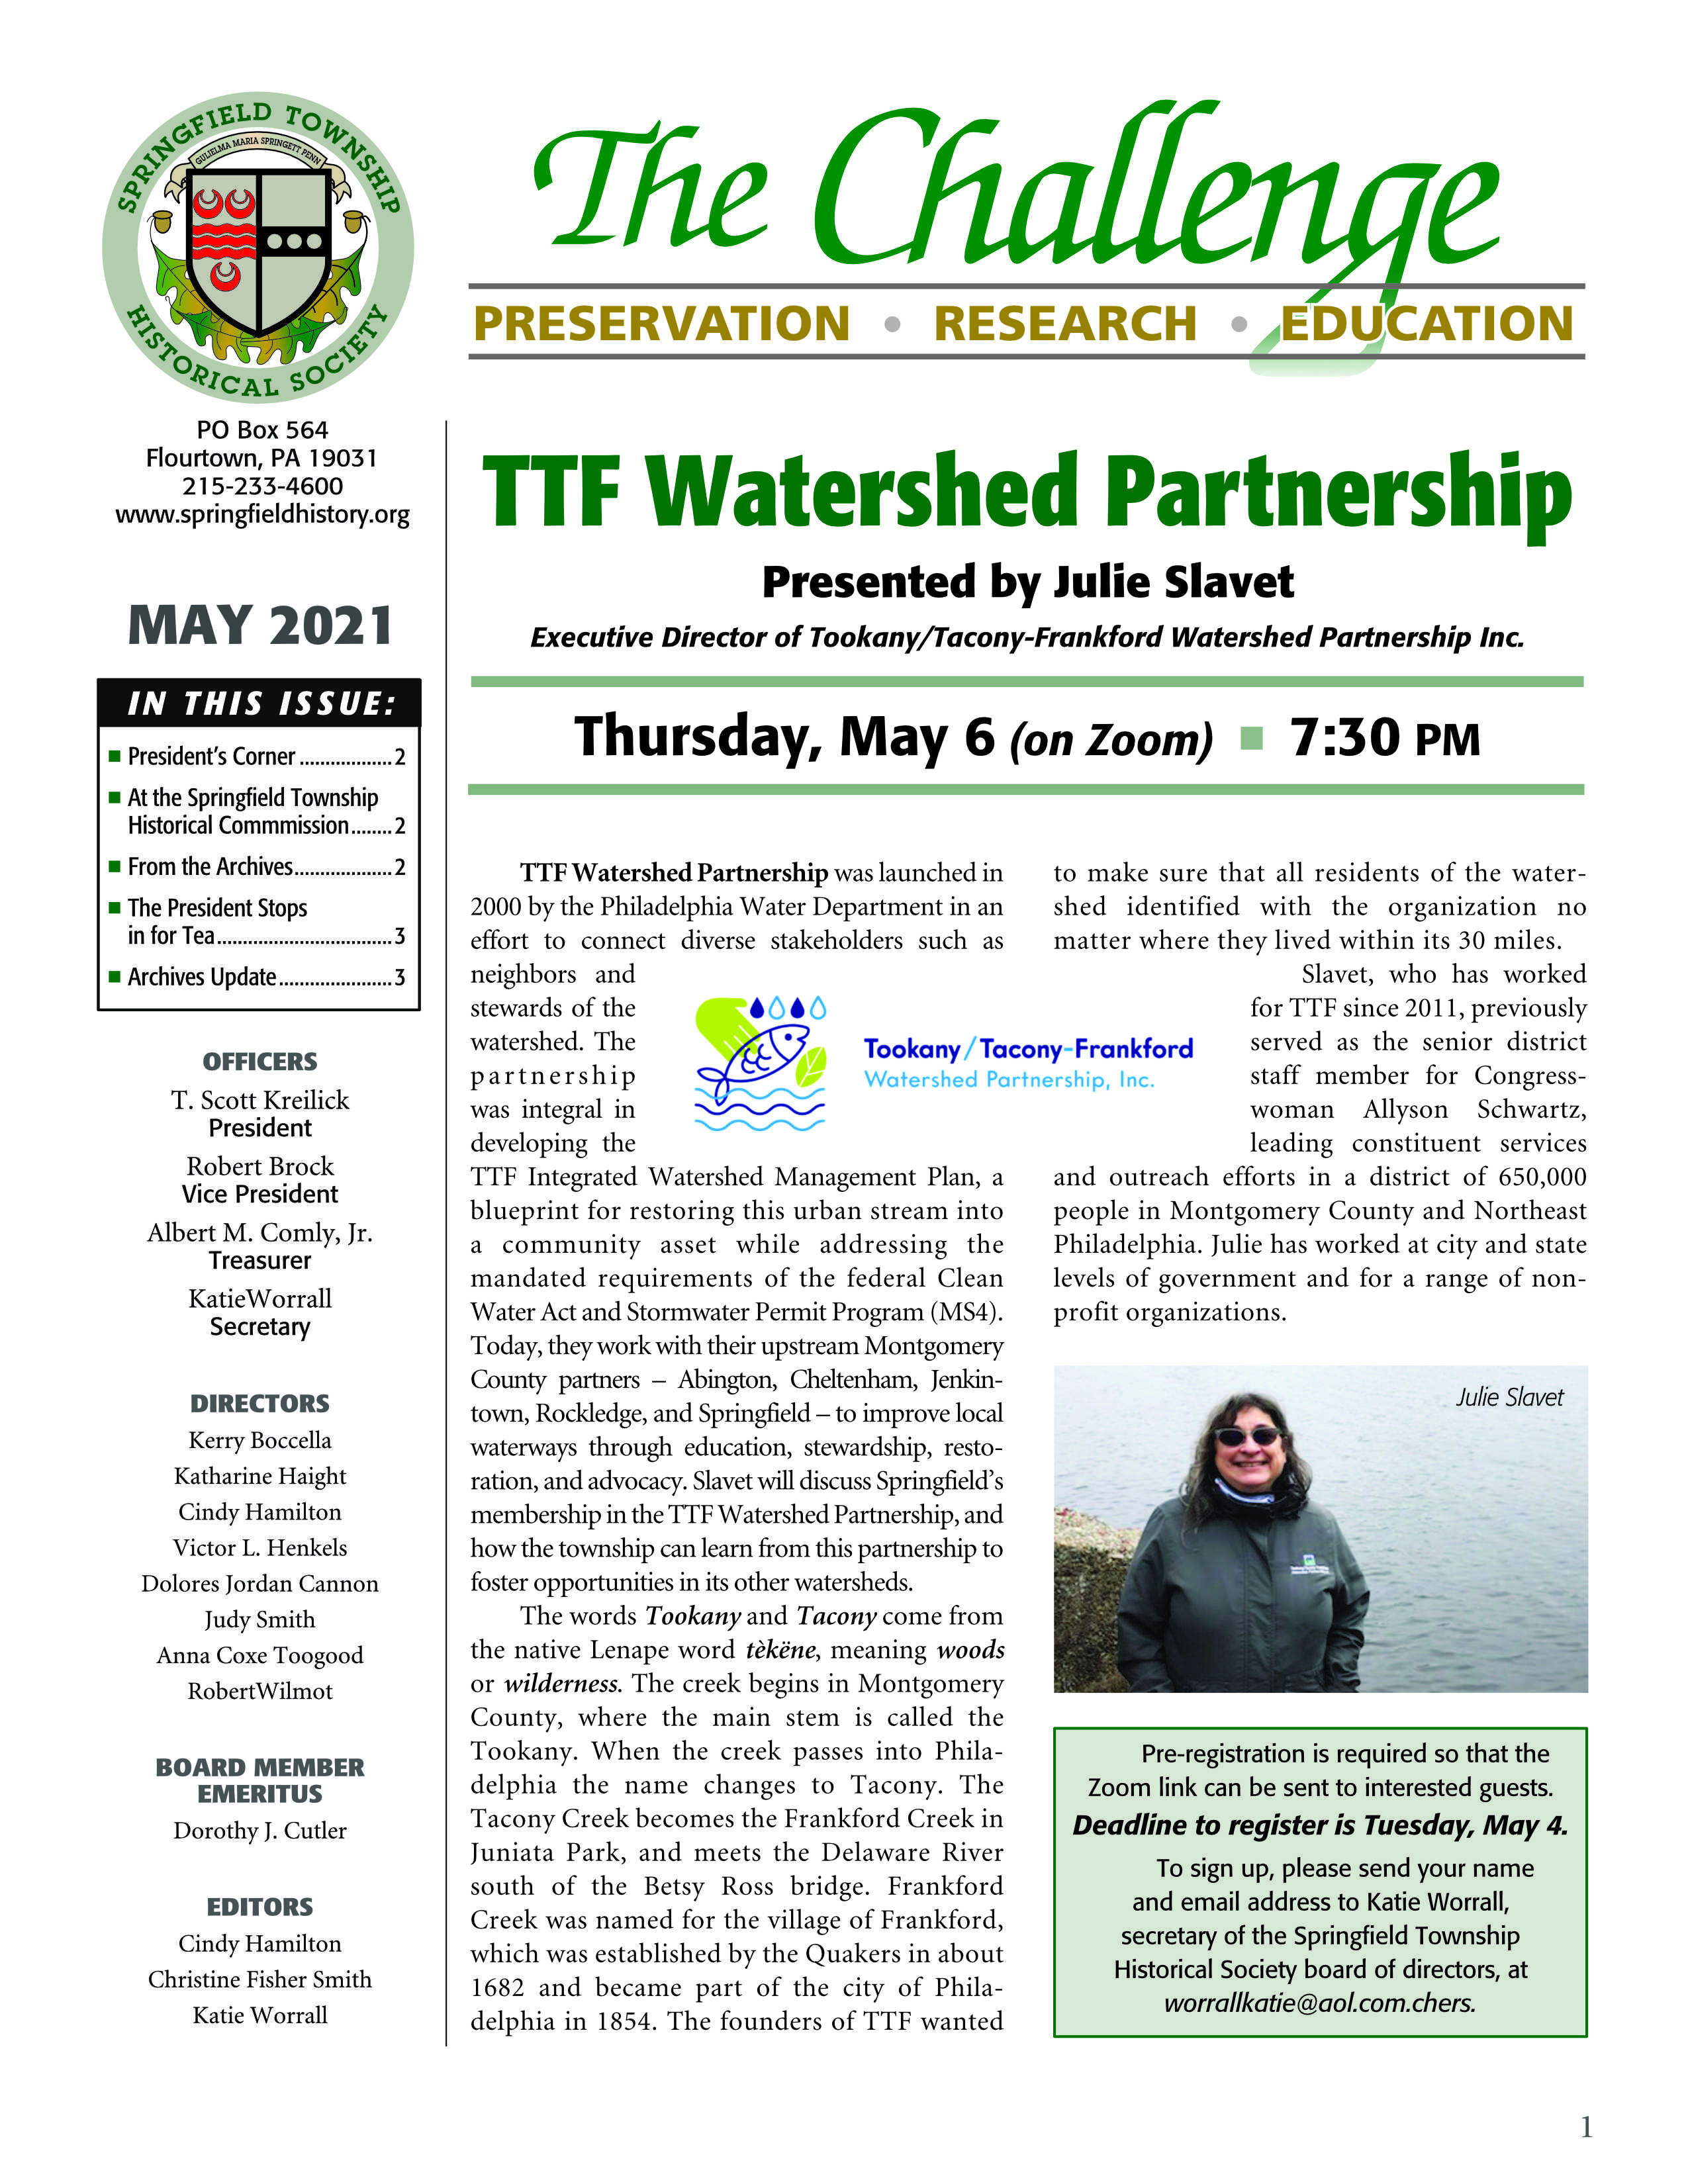 Julie Slavet, Executive Director Tookany/Tacony-Frankford Watershed Partnership Inc.